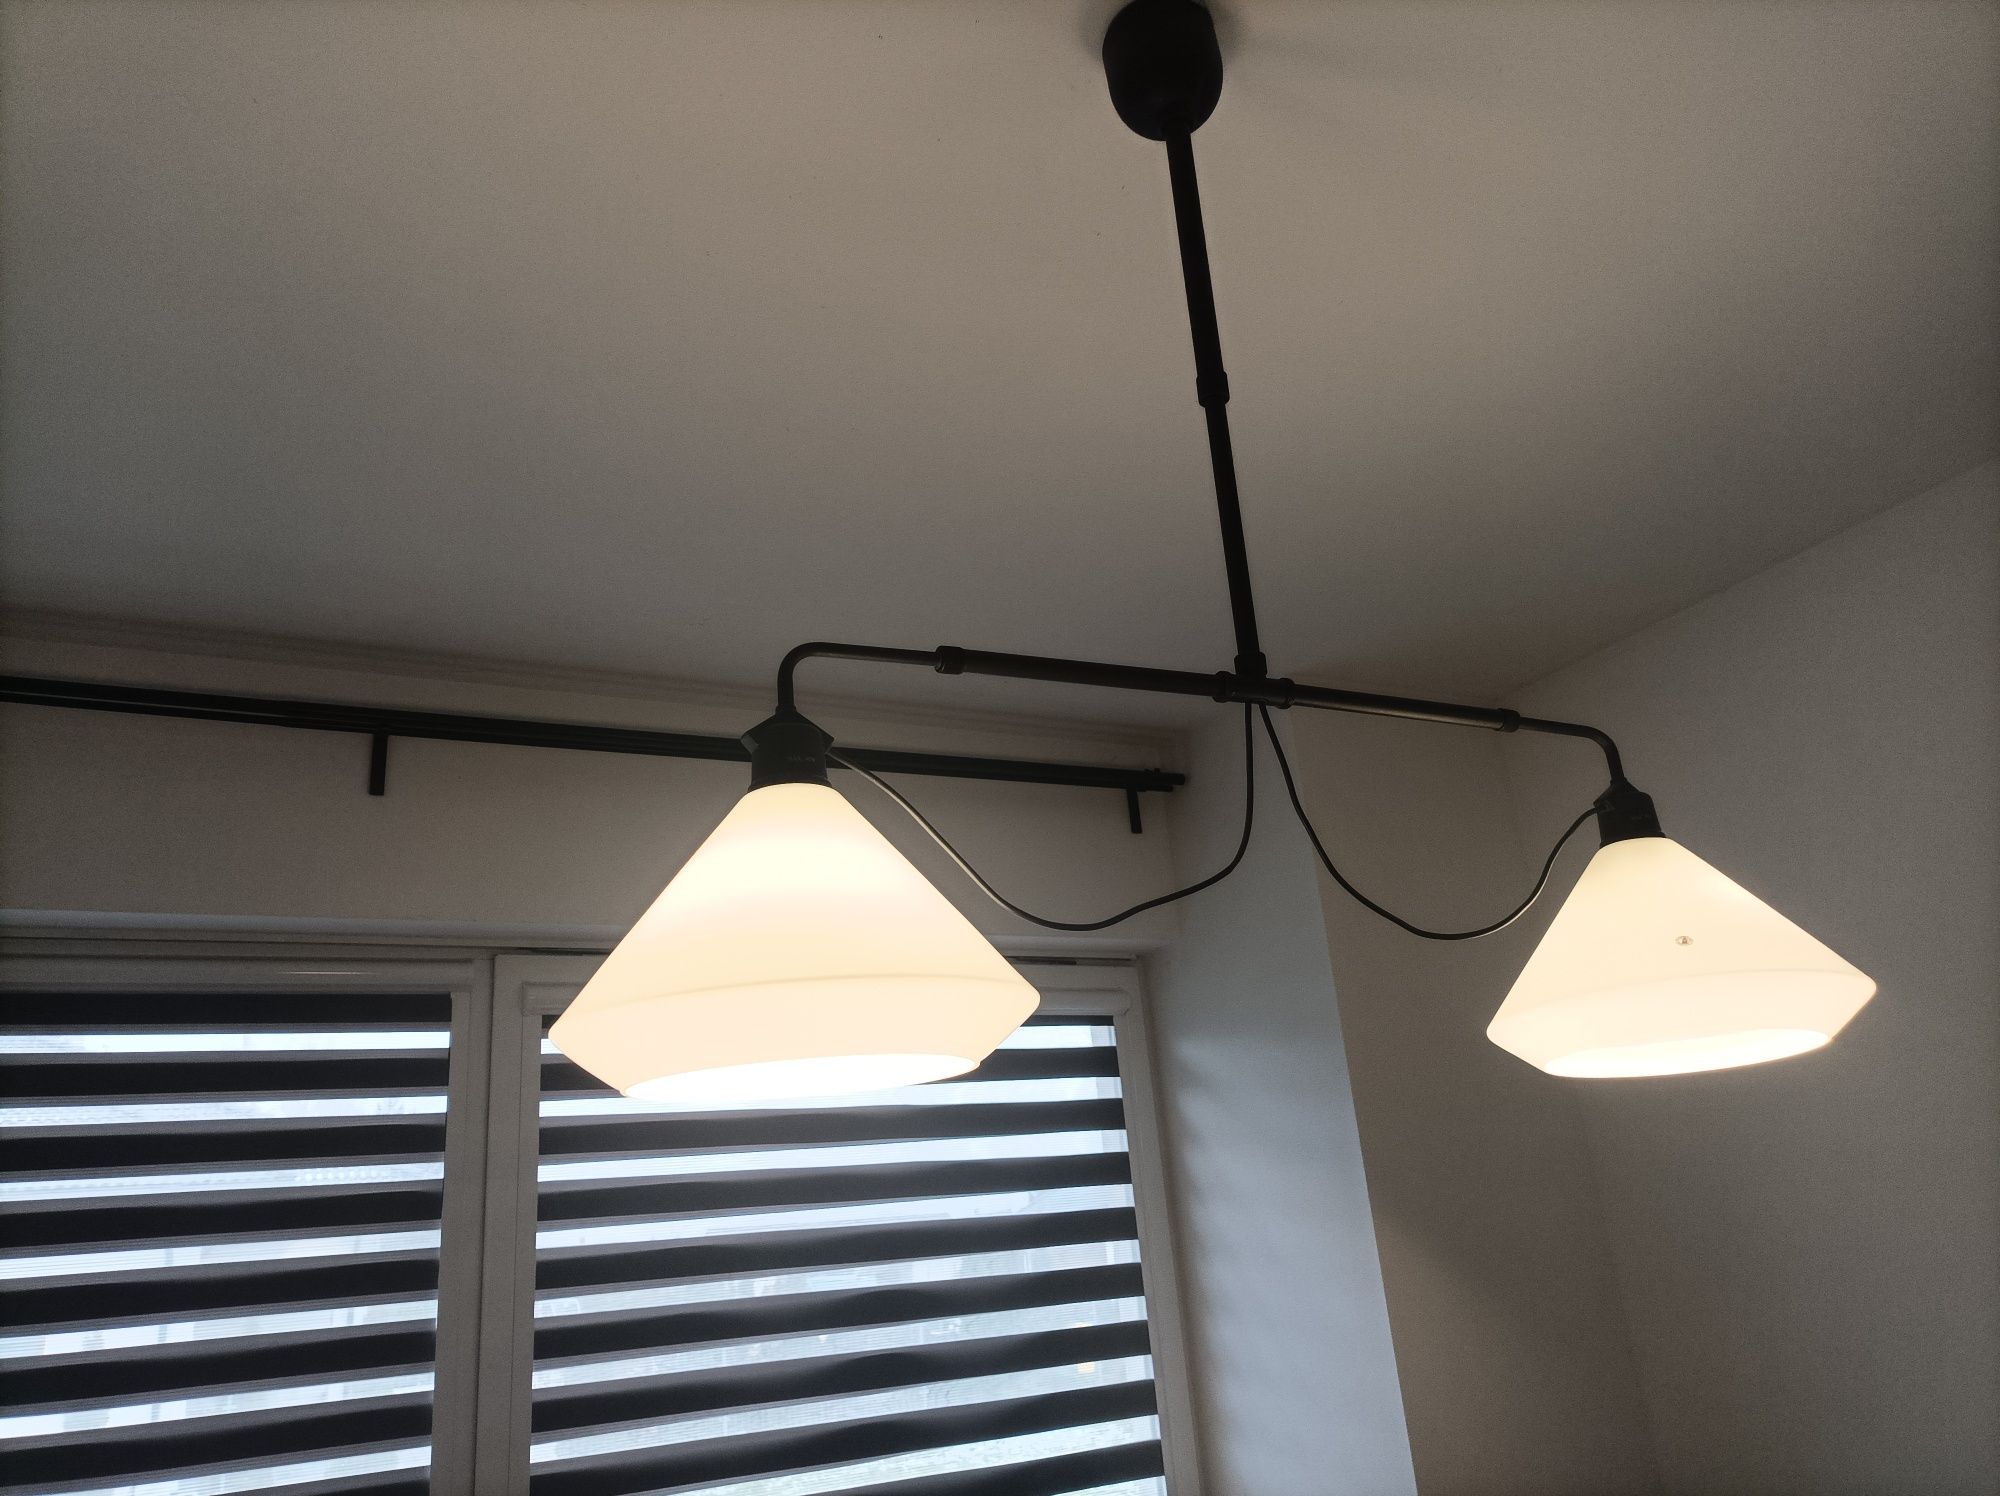 Lampa wisząca IKEA